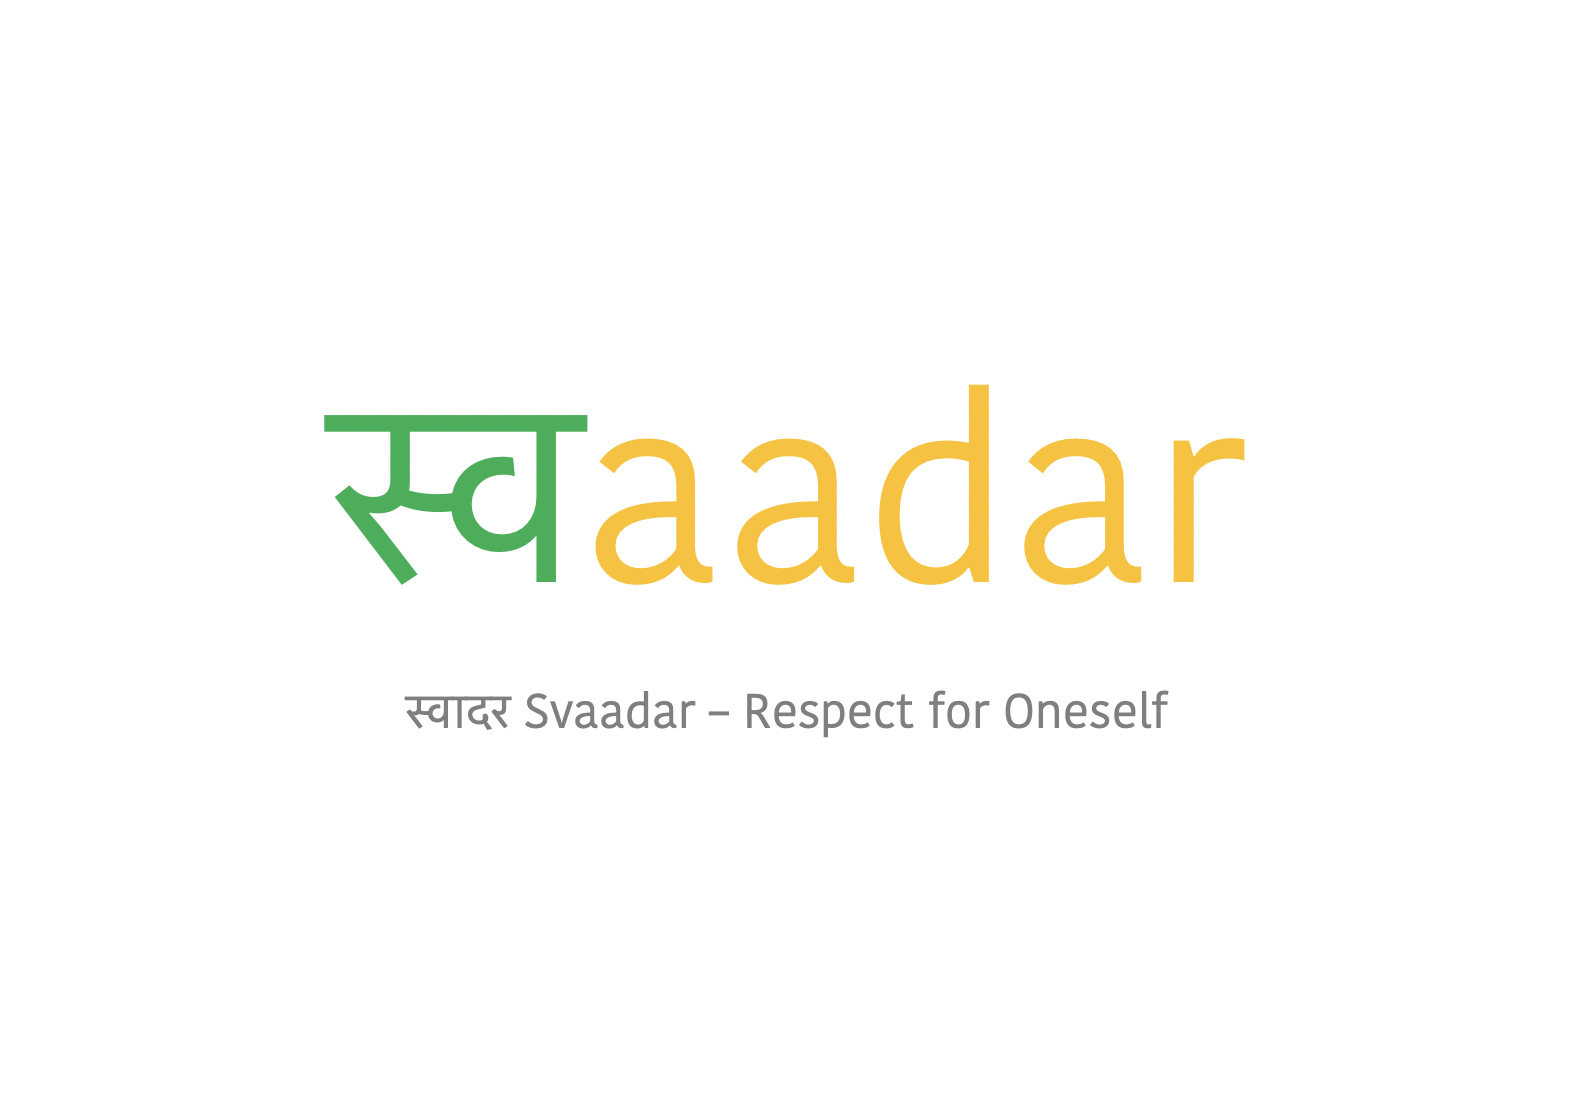 Svaadar's logo.